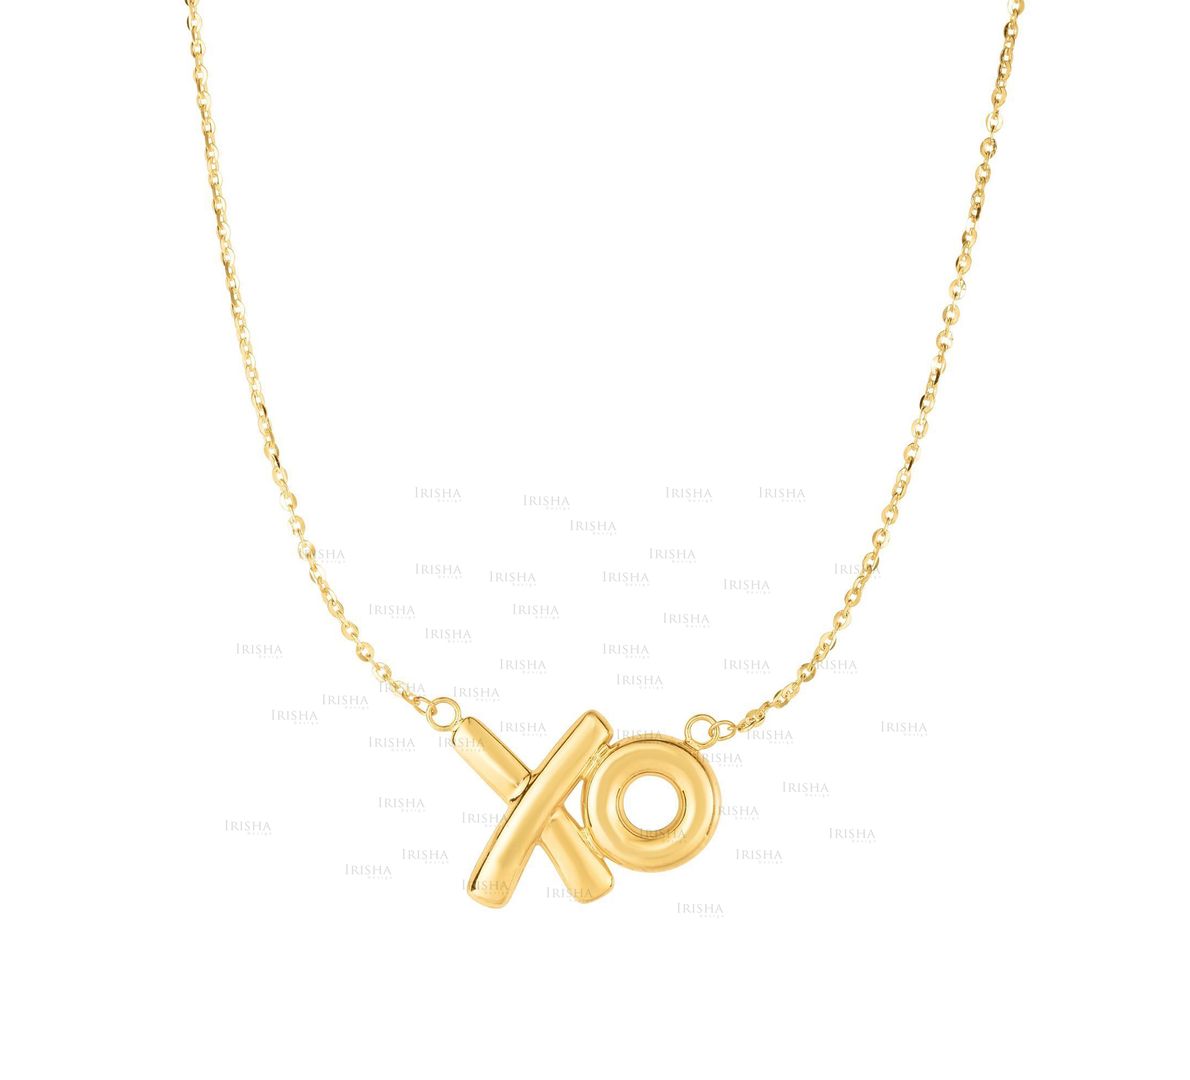 14K Yellow Gold 20x13mm Shiny XO Charm Necklace with 18'' Chain Fine Jewelry